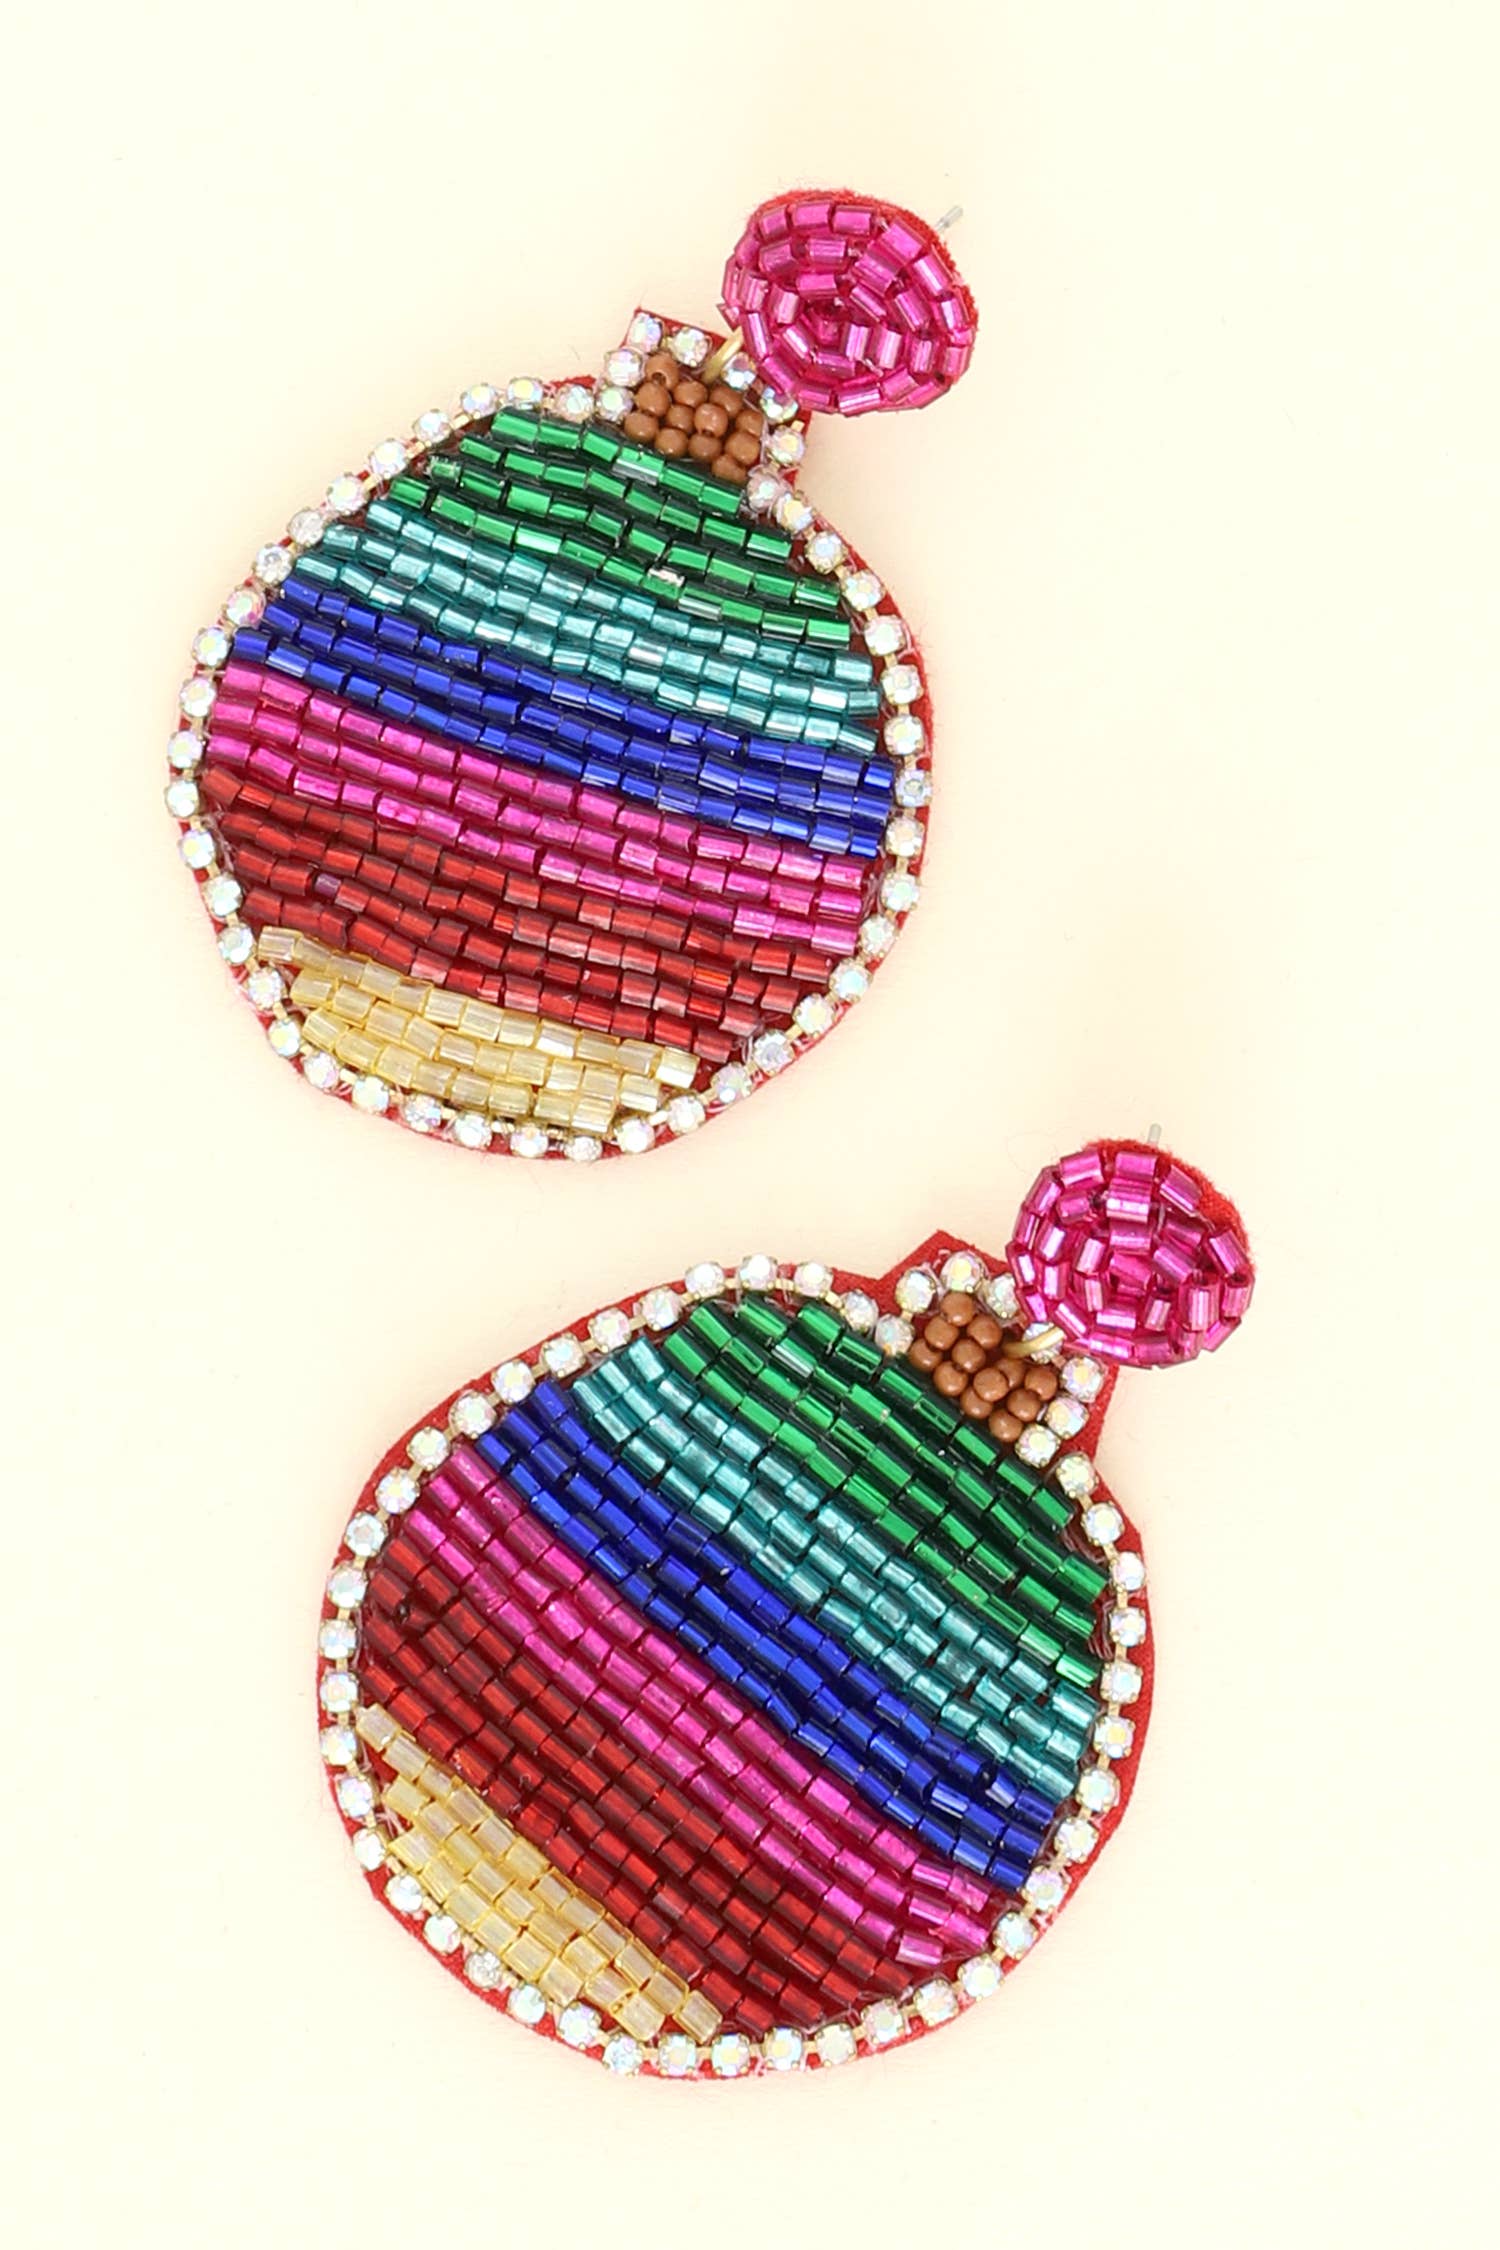 Rainbow Christmas Sphere Dangle Earrings - Pretty Crafty Lady Shop